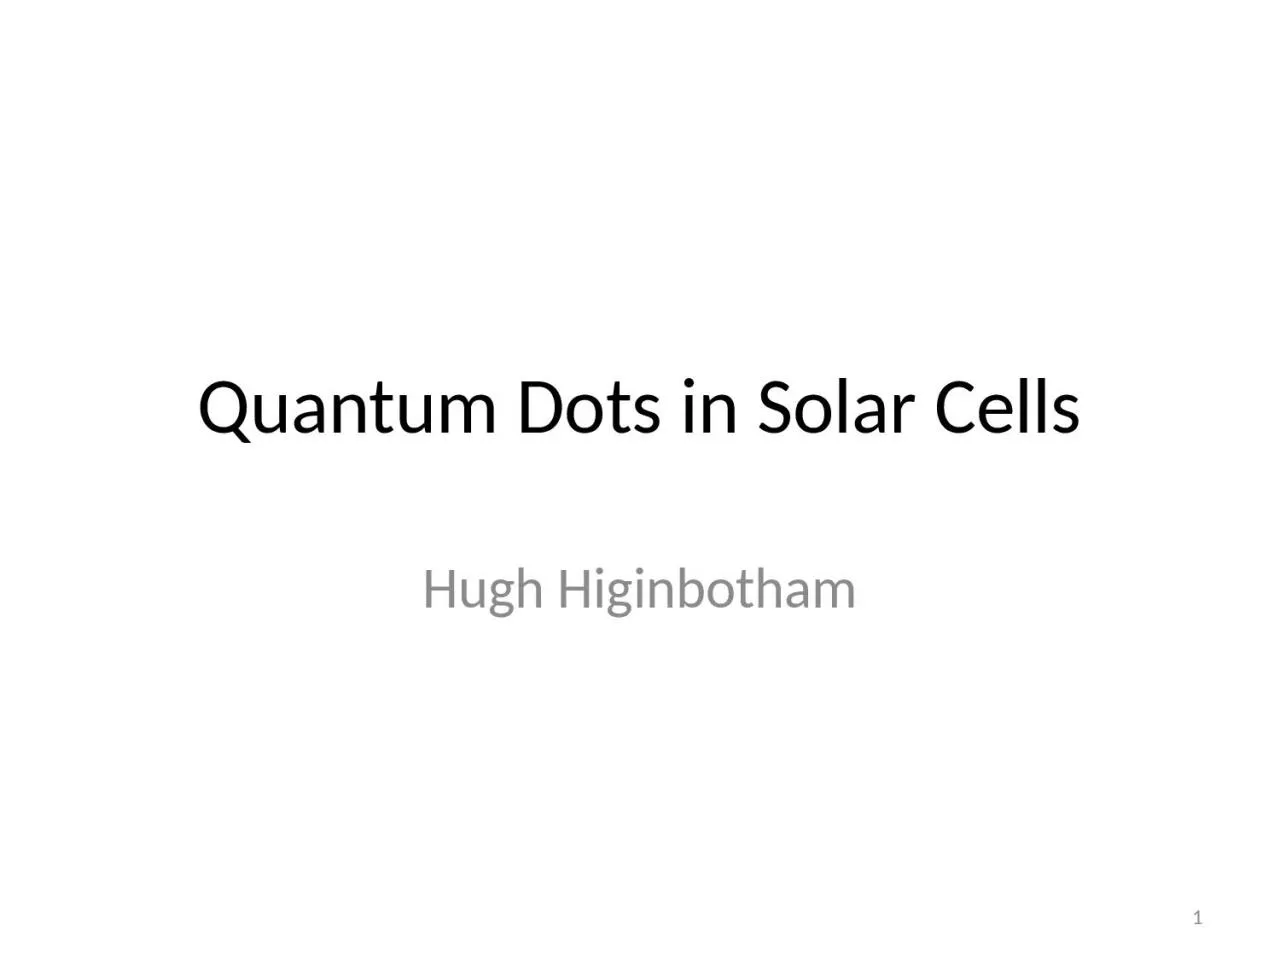 Quantum Dots in Solar Cells